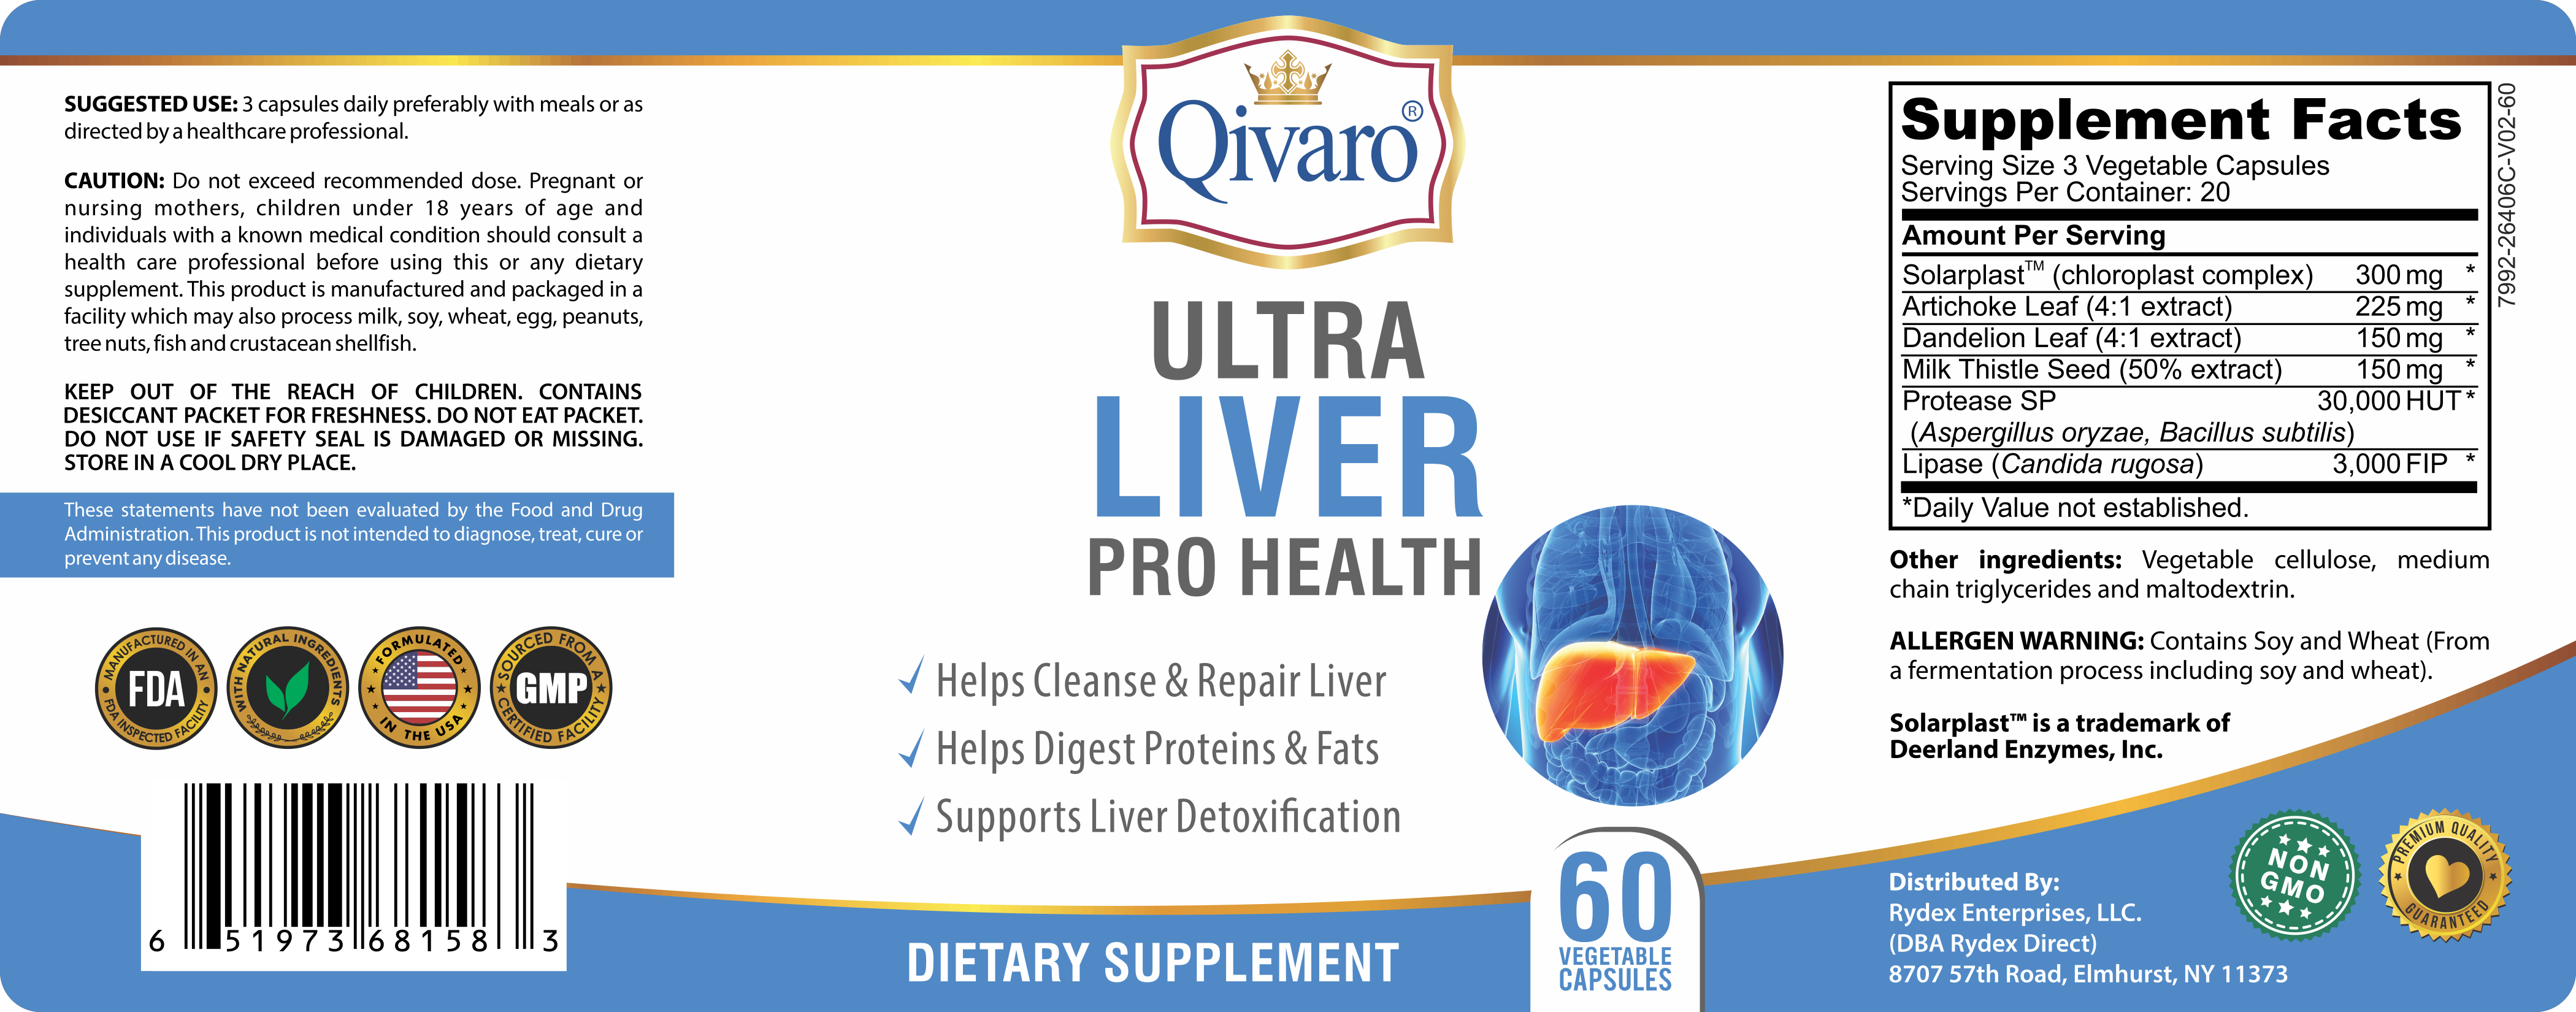 SKU:QIH26-Ultra Liver Pro Health